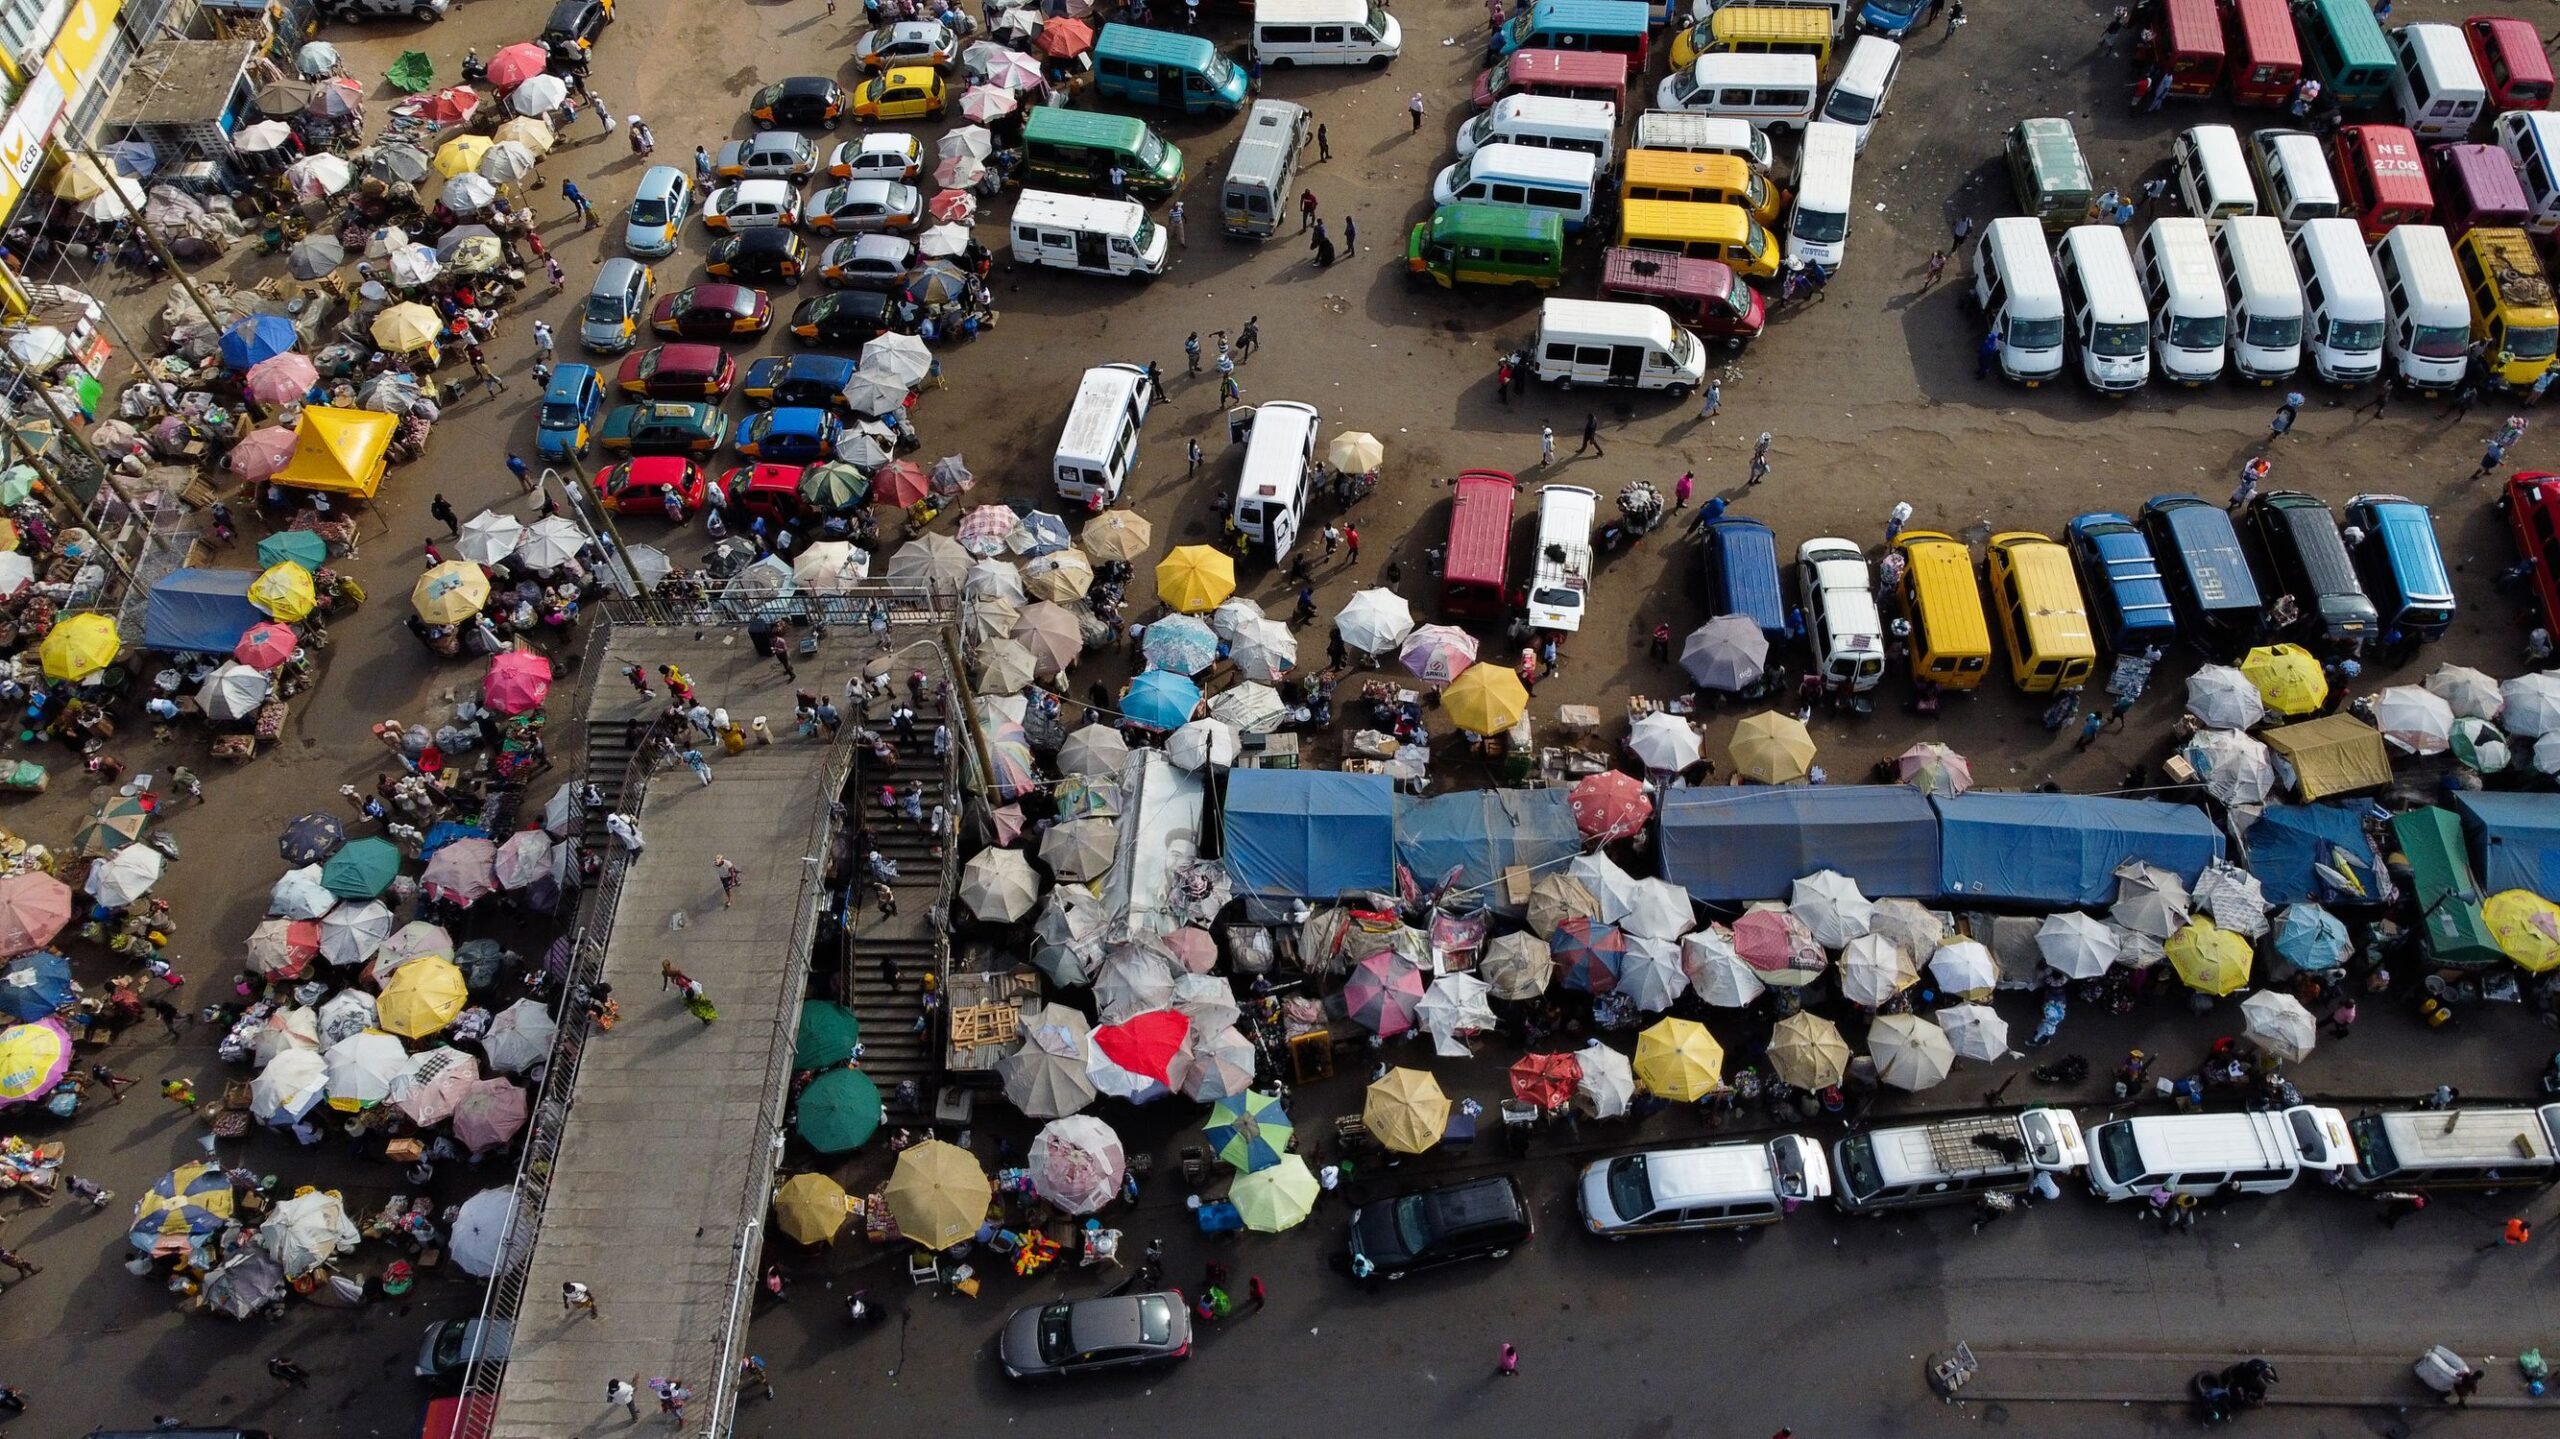 Kaneshie market from the air, Kaneshie, Accra, Ghana. Credit Festus Jackson Davis